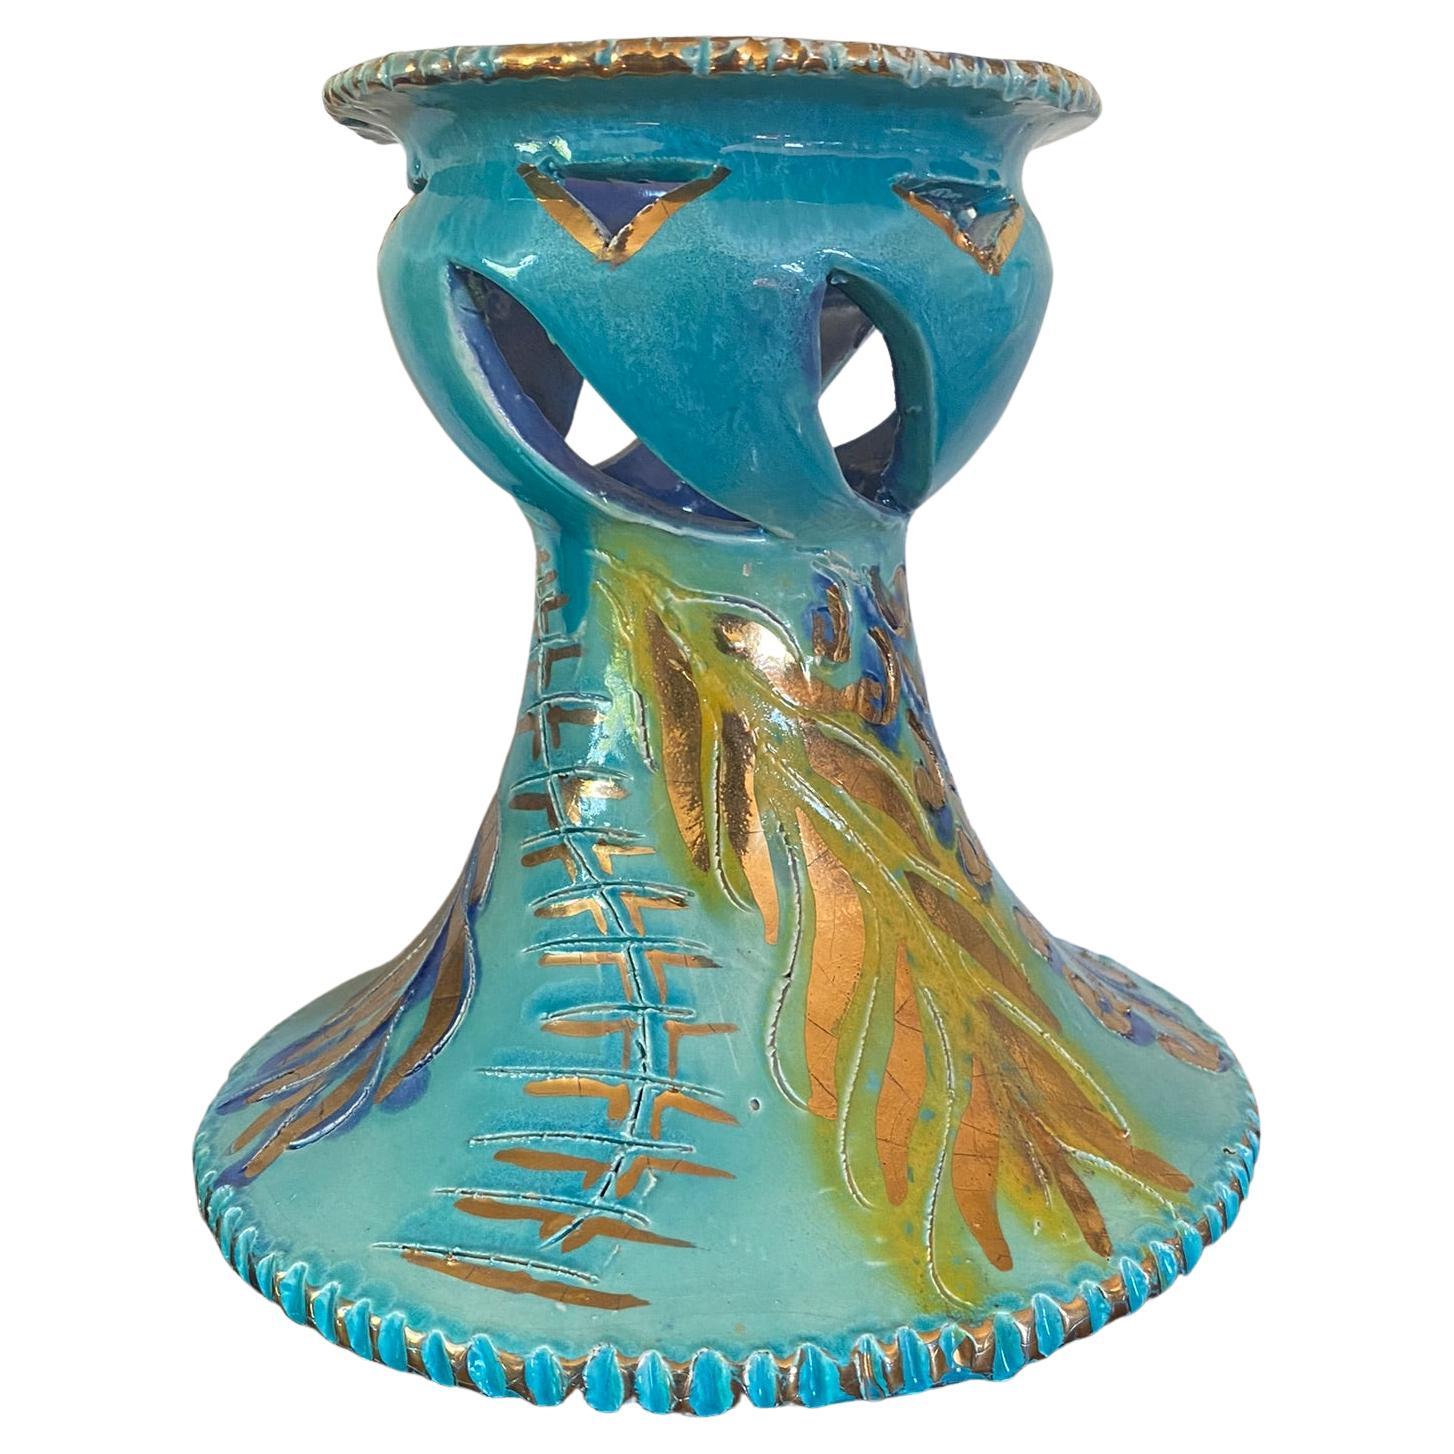 Grand vase en céramique de style Monaco, circa 1960, signé Dalio